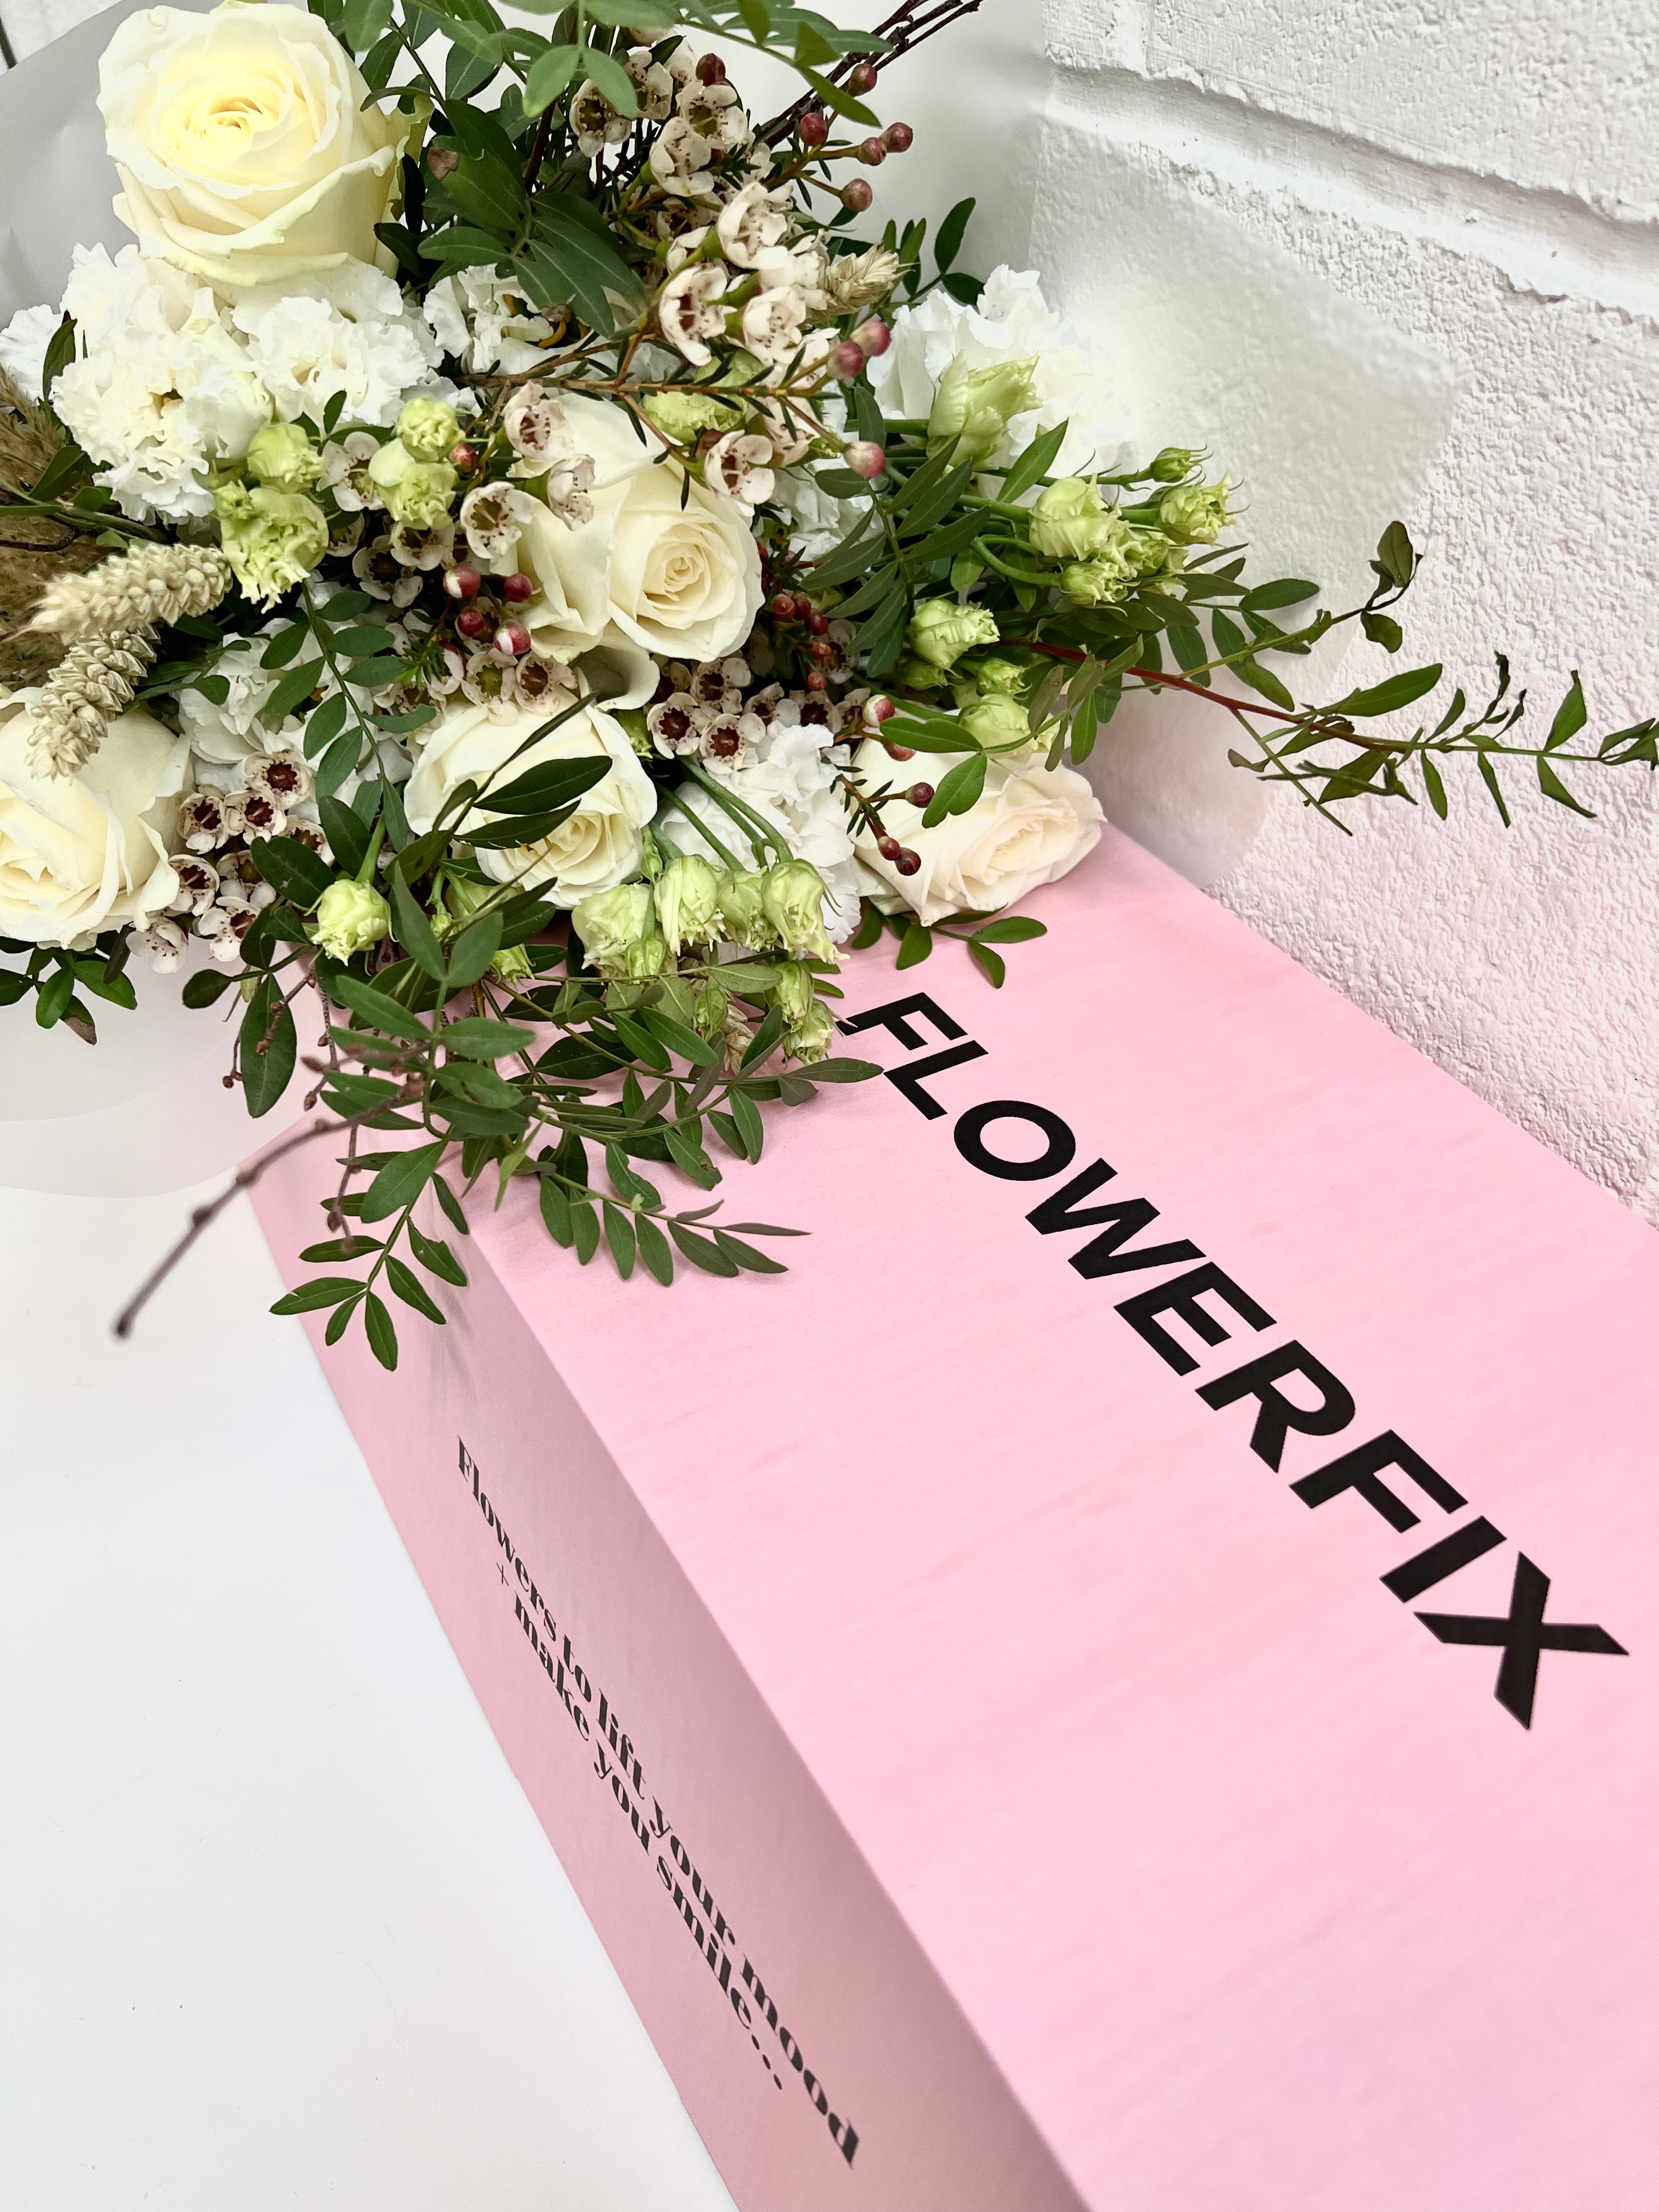 White Flowers by Post - Luxury Flowers UK - FlowerFix